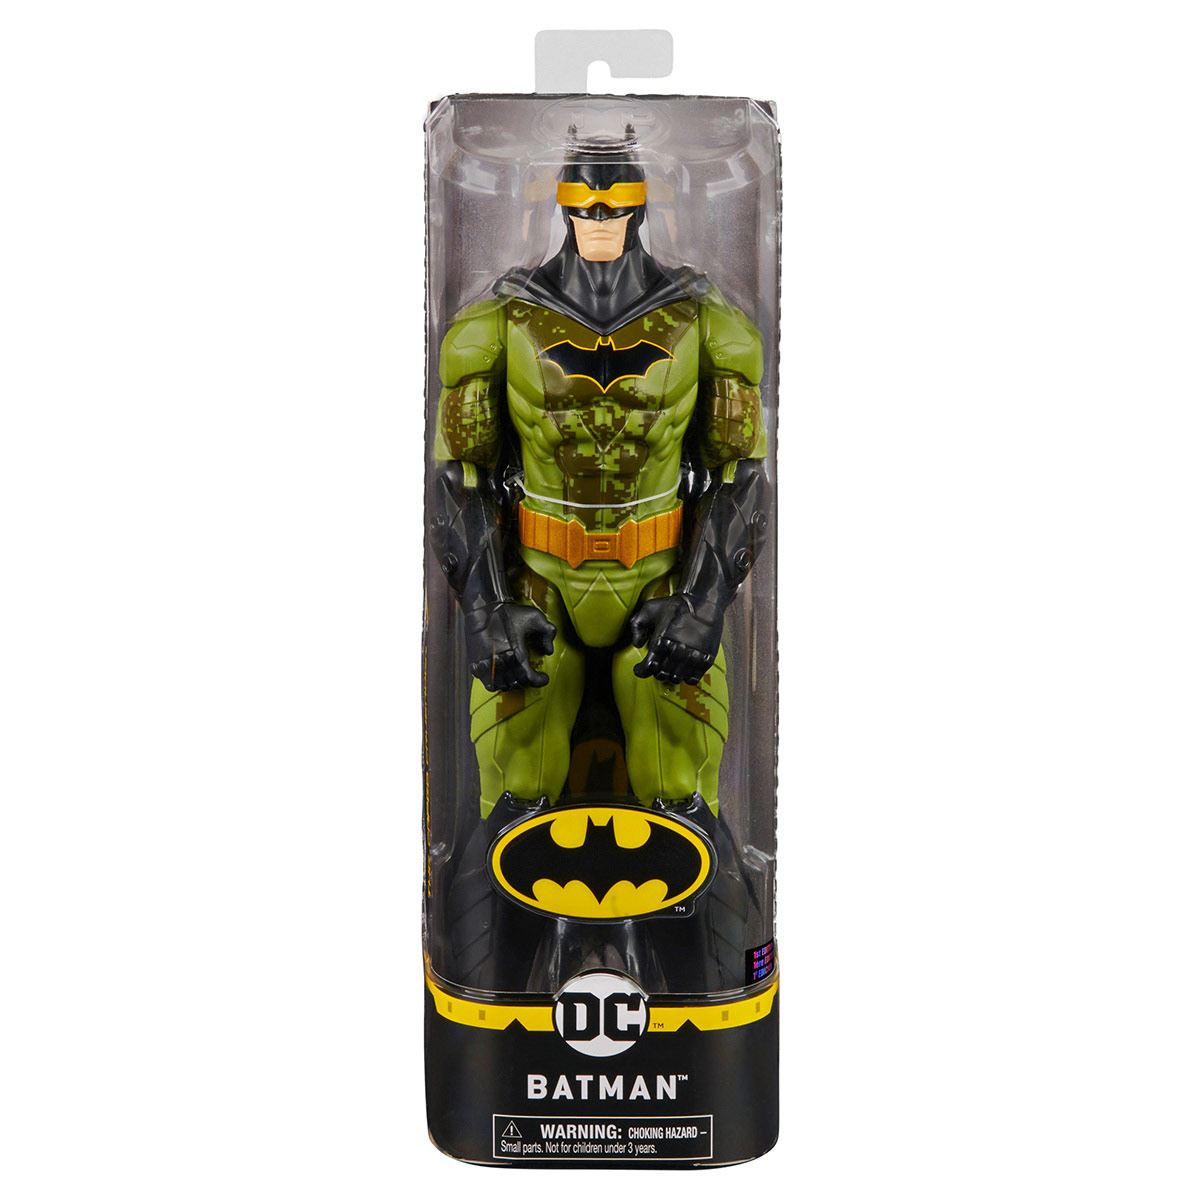 Batman: DC - Batman Toxic Figura 12 Pulgadas